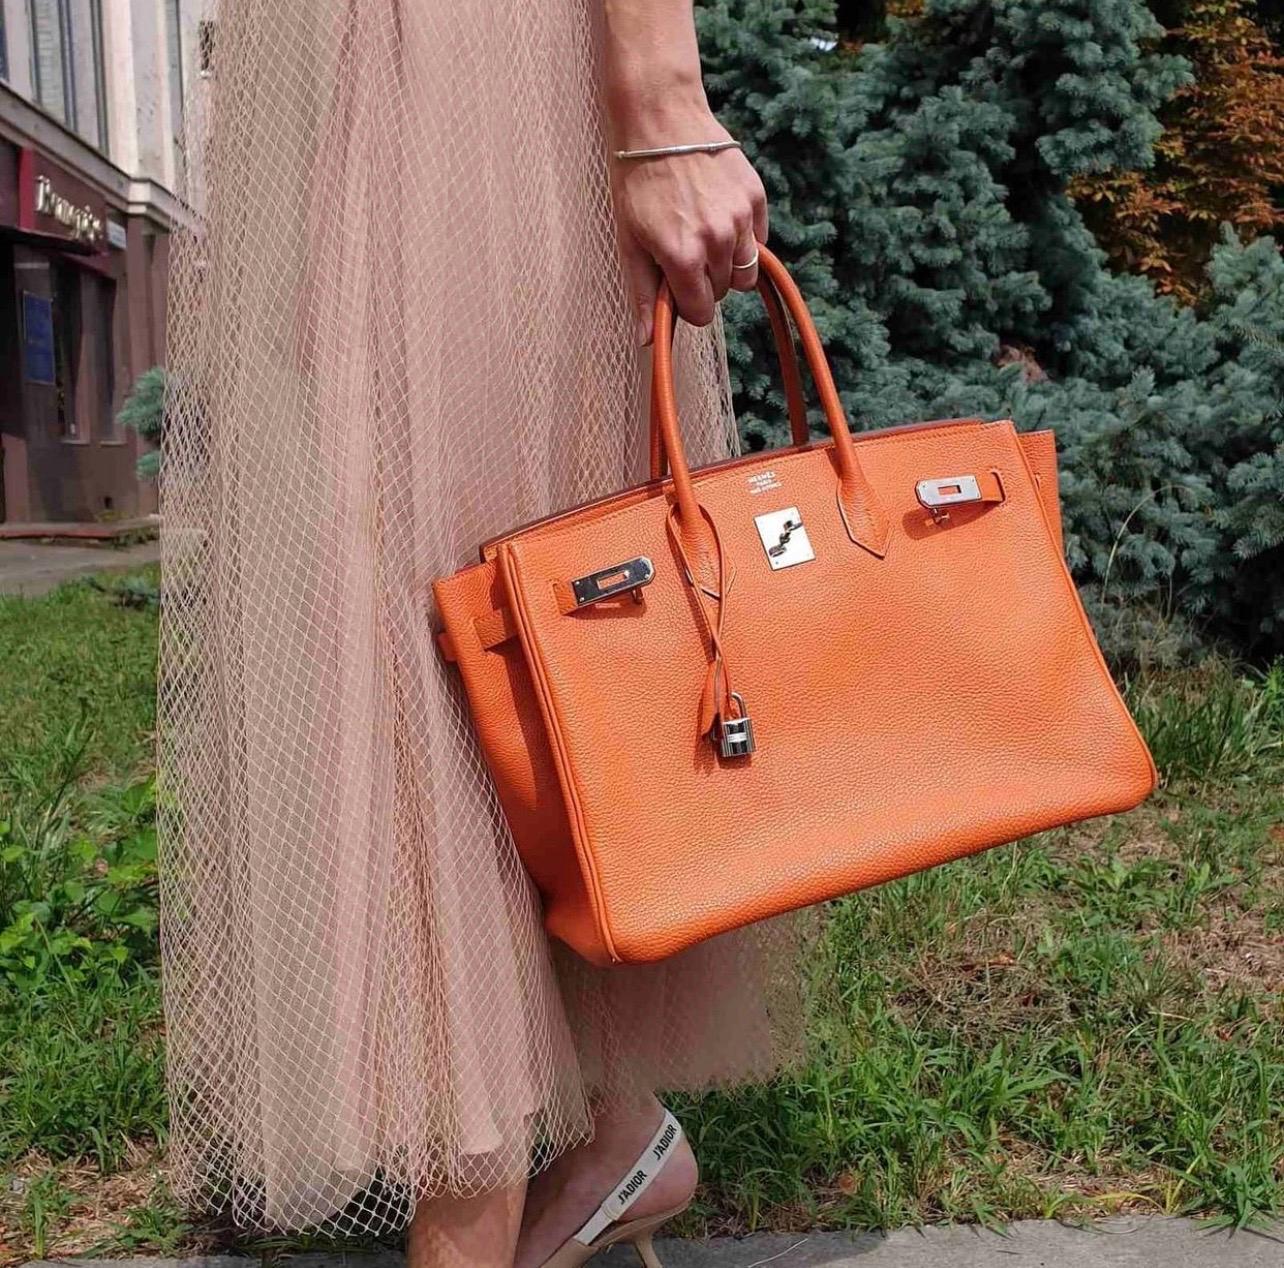 Hermès Birkin 35 2 colour Leather Handbag 7